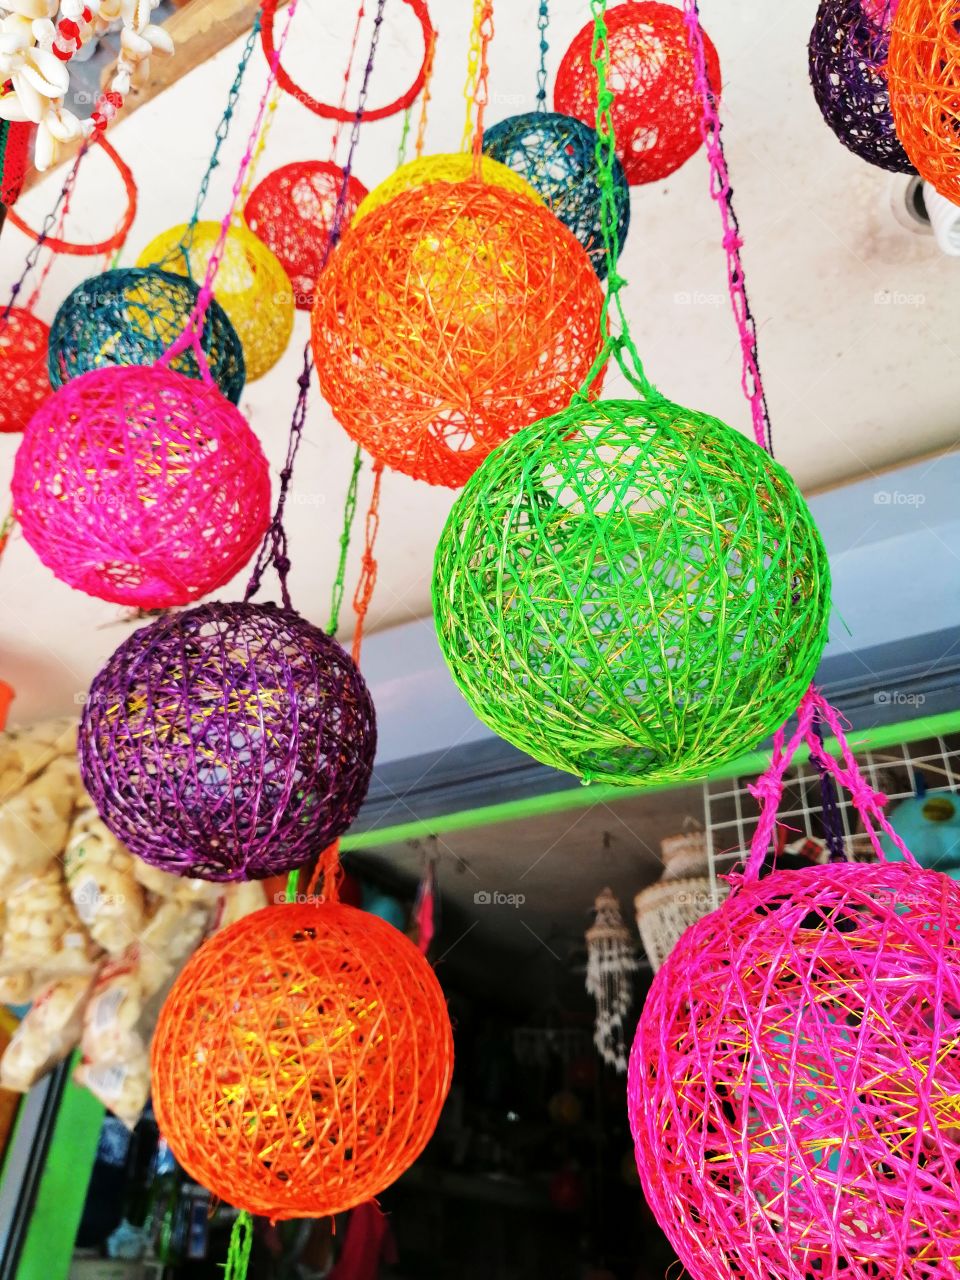 Yarn ball ornaments for decoration.